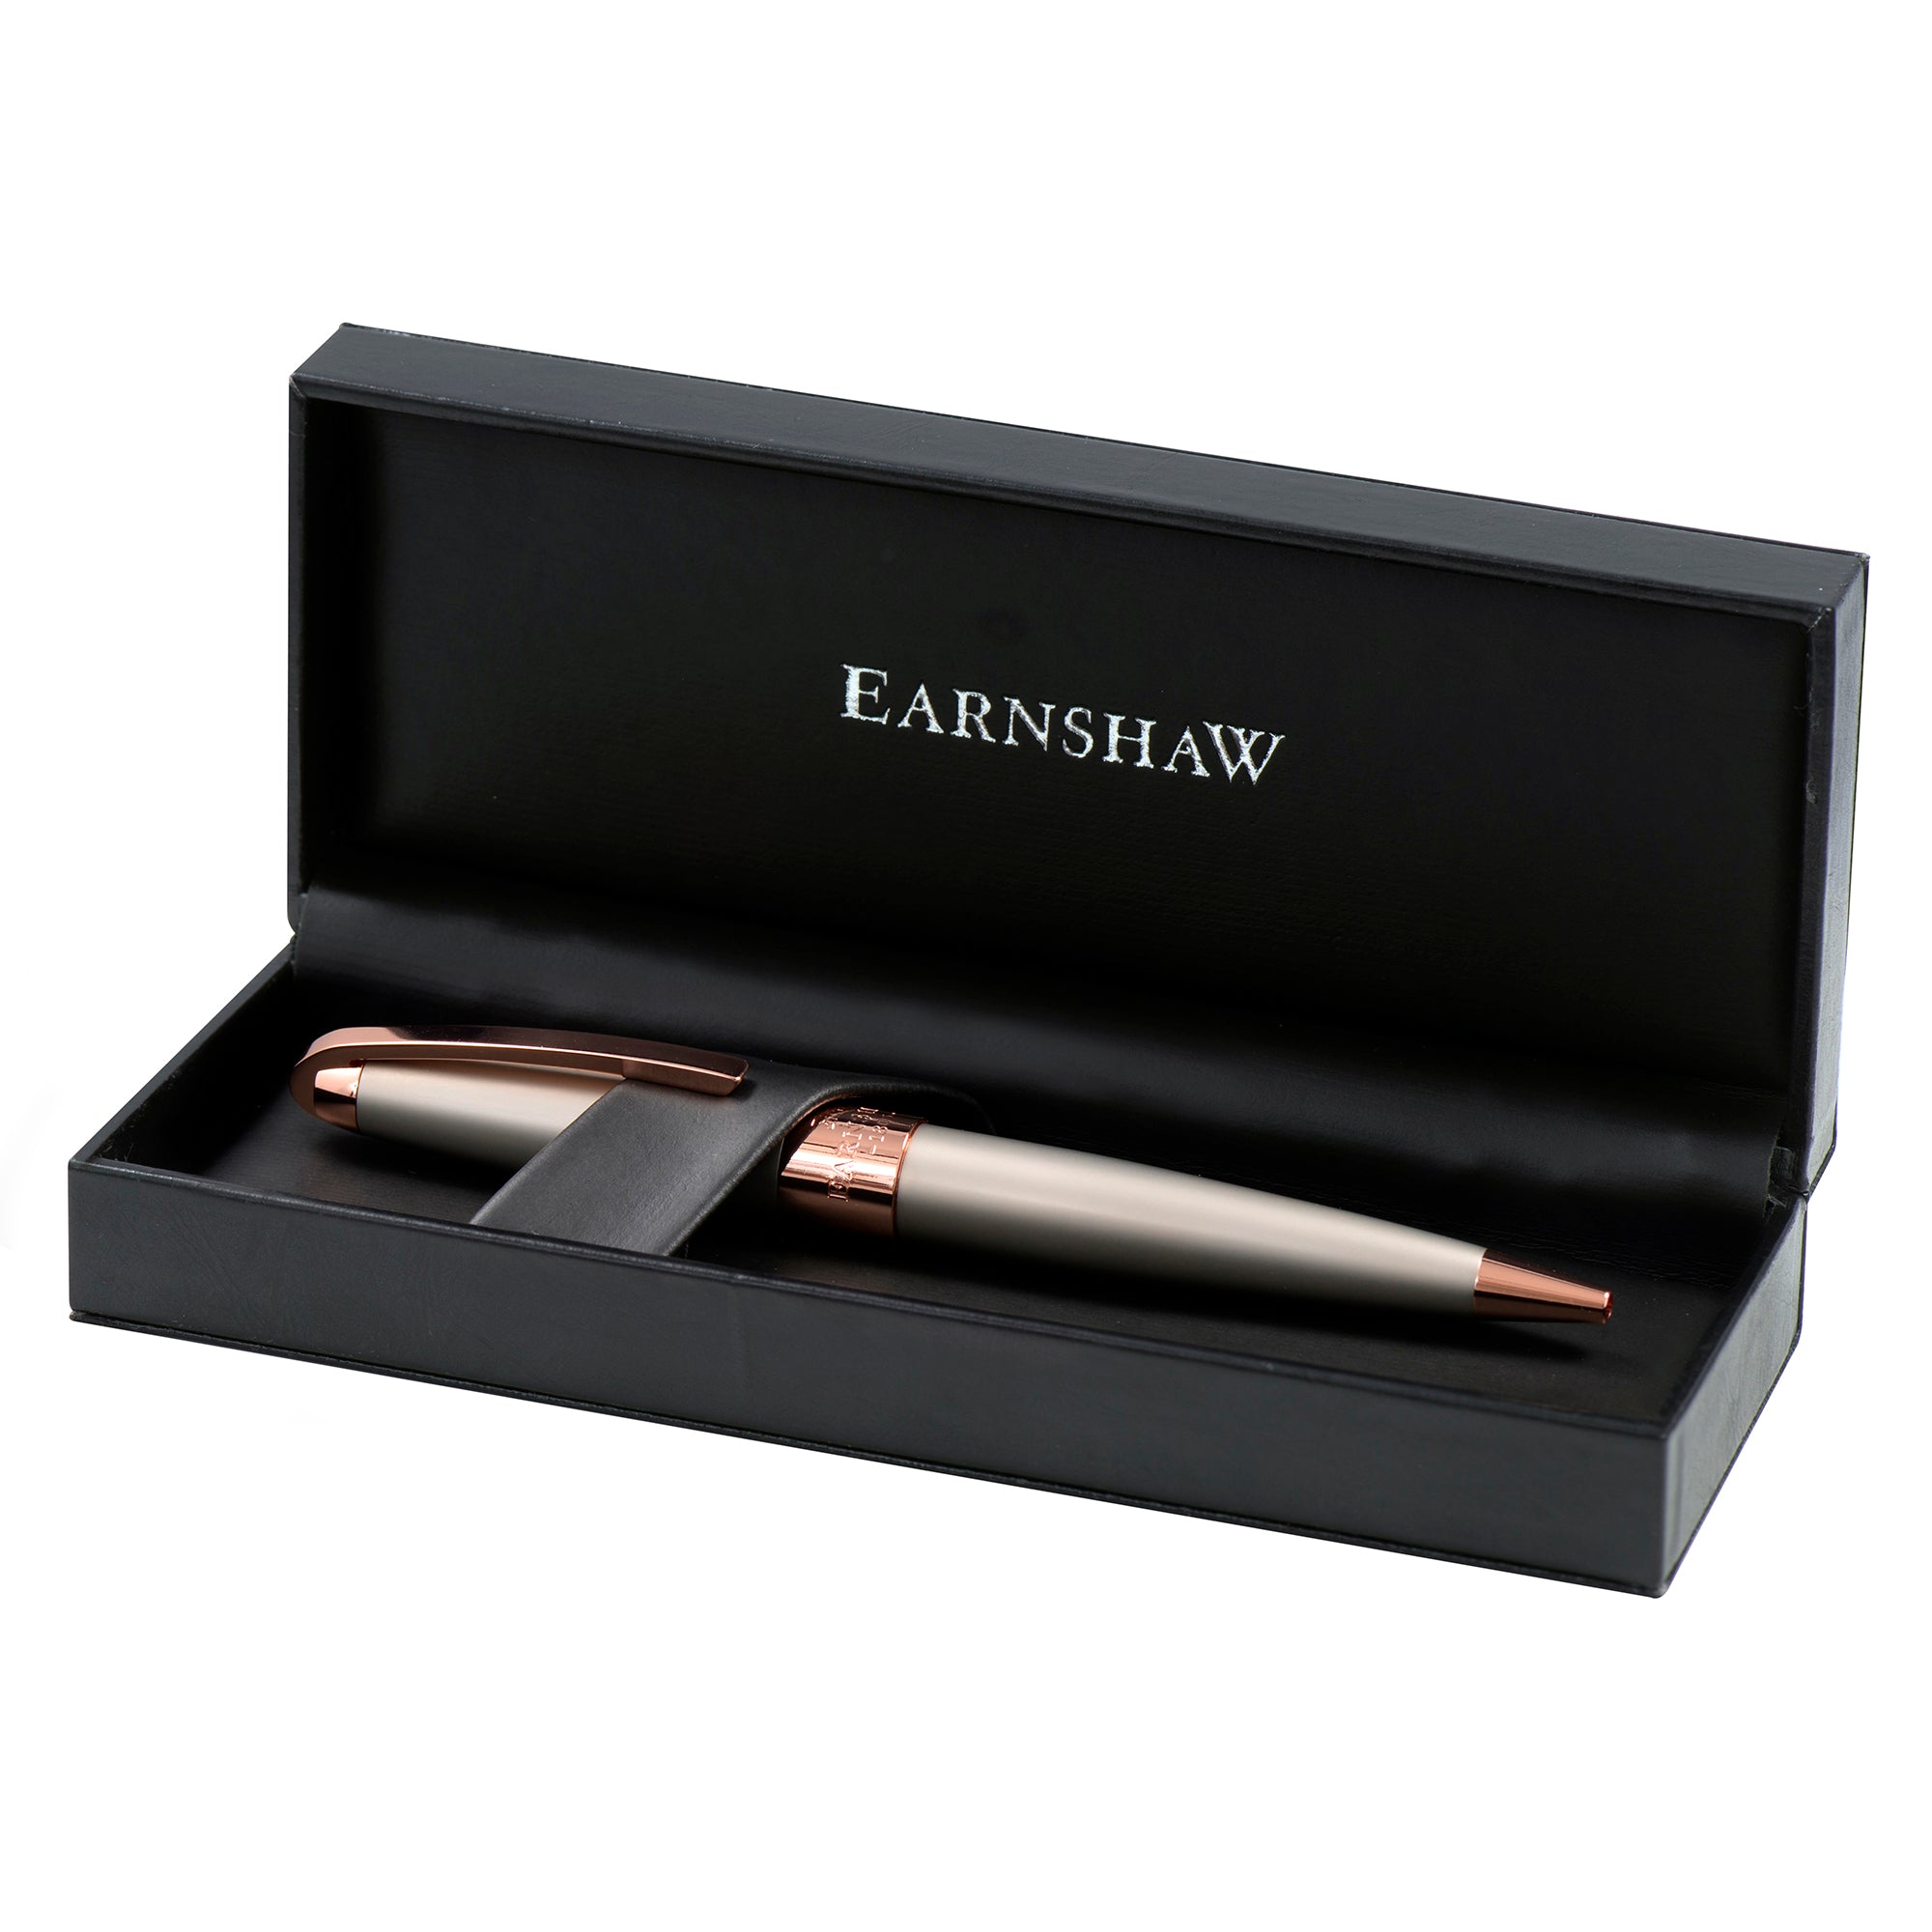 Thomas Earnshaw Thomas Earnshaw Earnshaw Ball Pen Accessory ES-Pen2-03